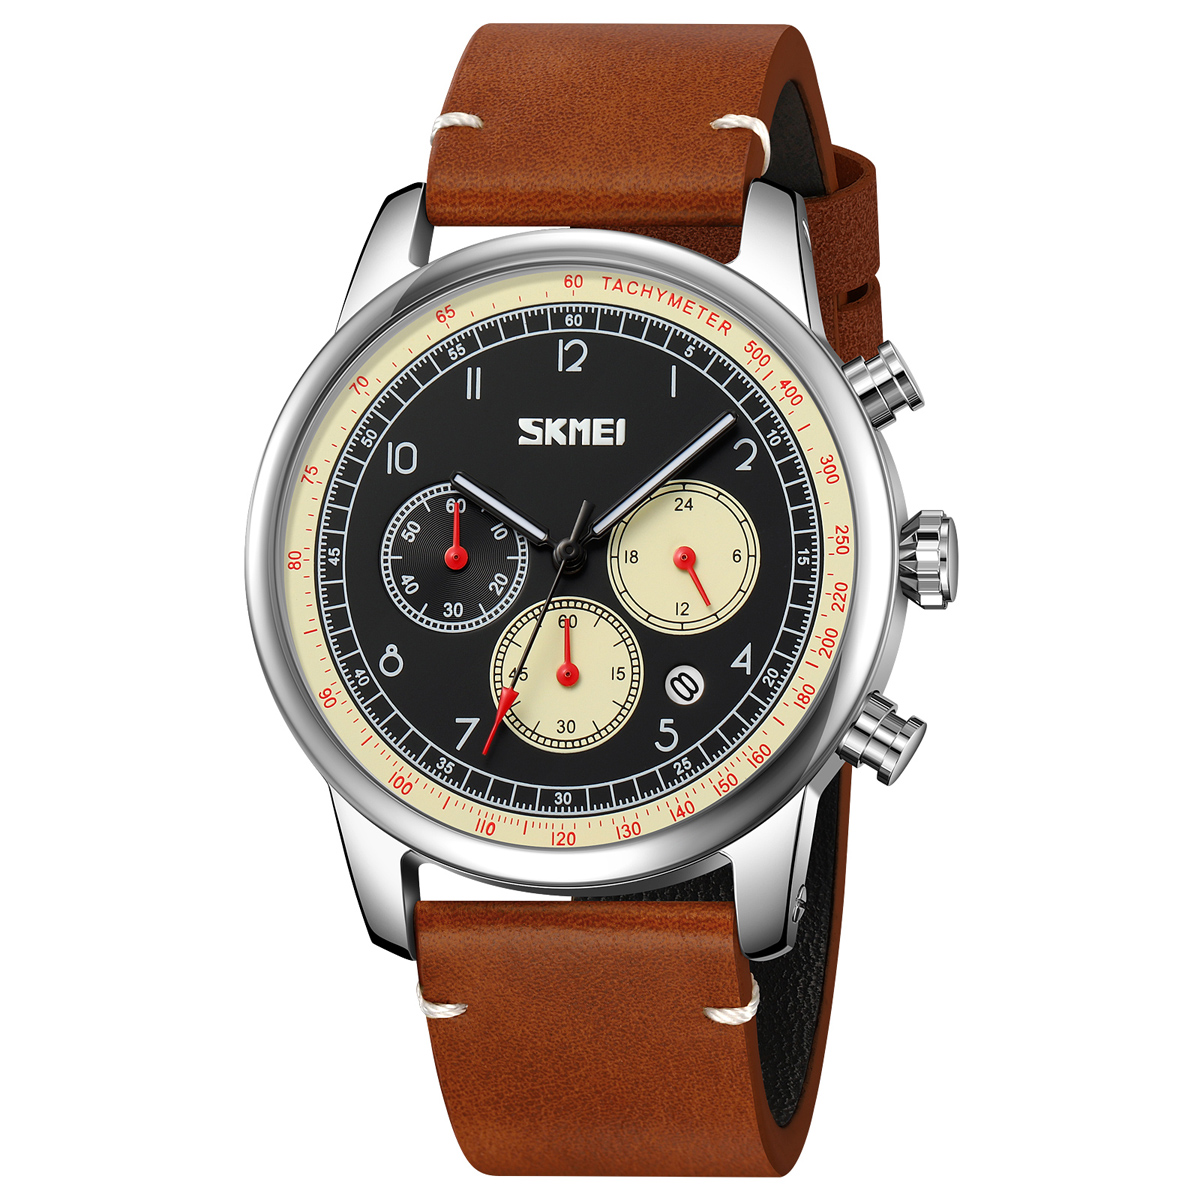 Skmei leather watch-Skmei Watch Manufacture Co.,Ltd